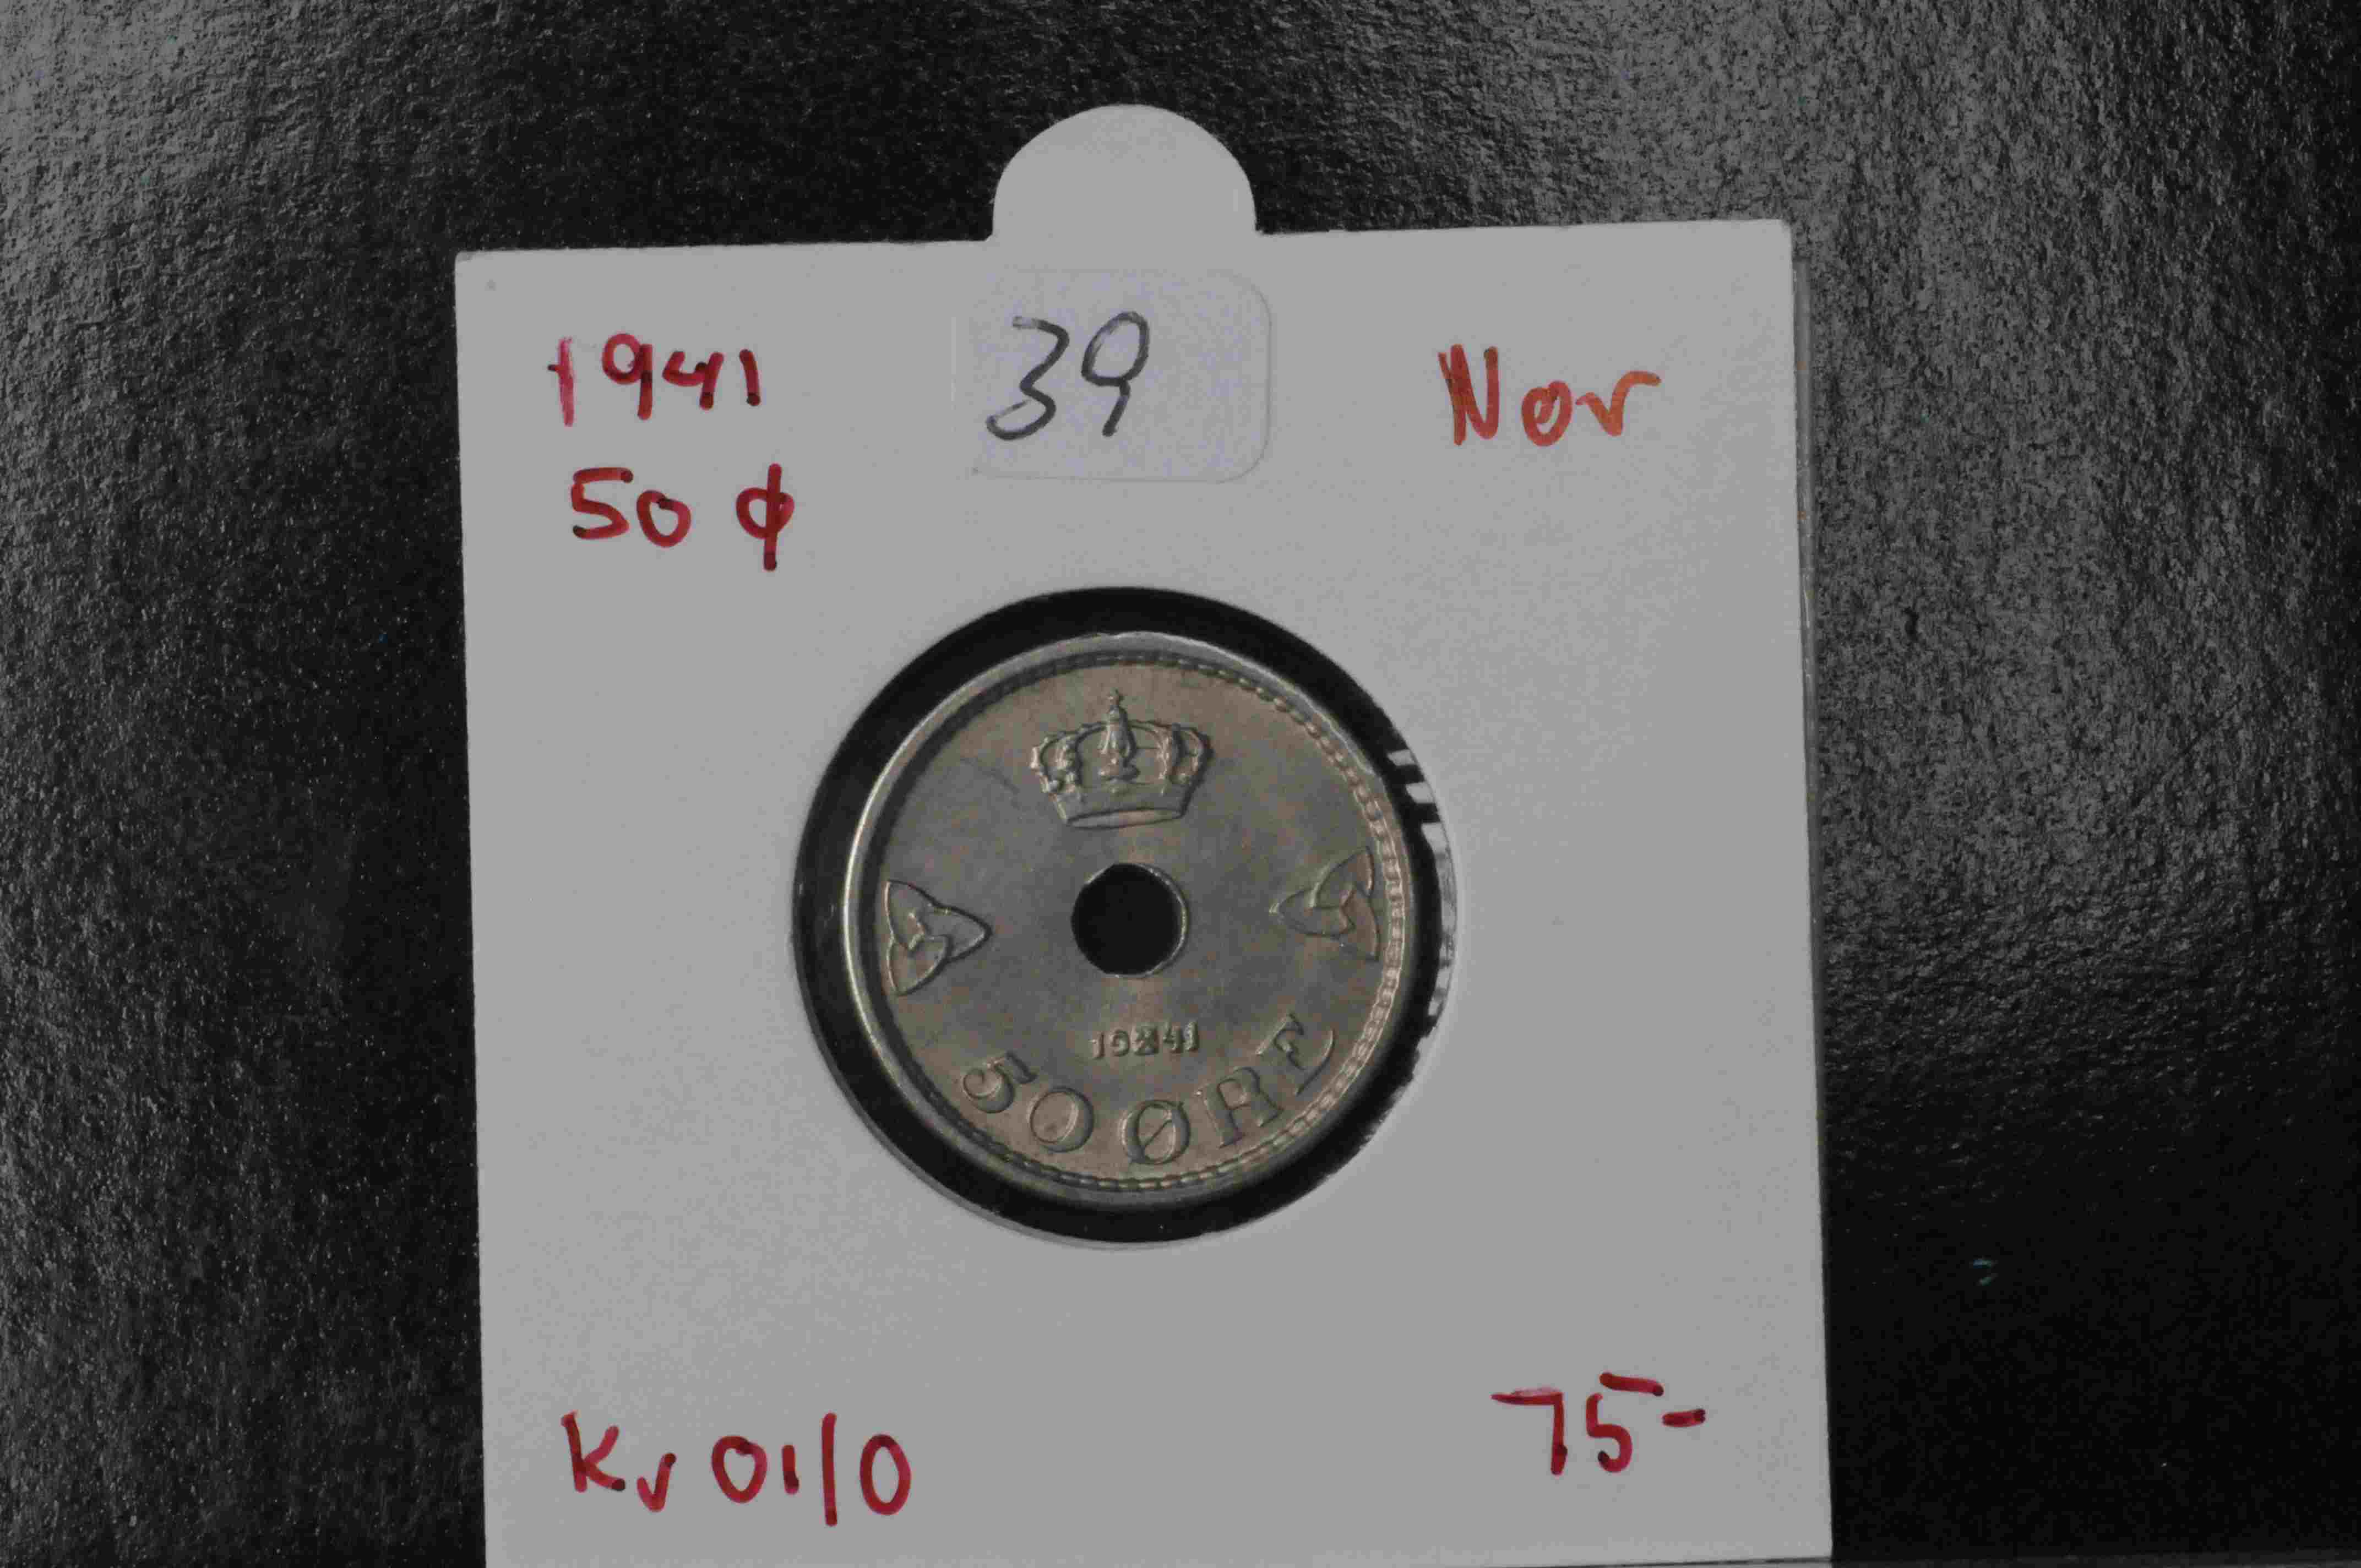 50ø 1941 kv01/0